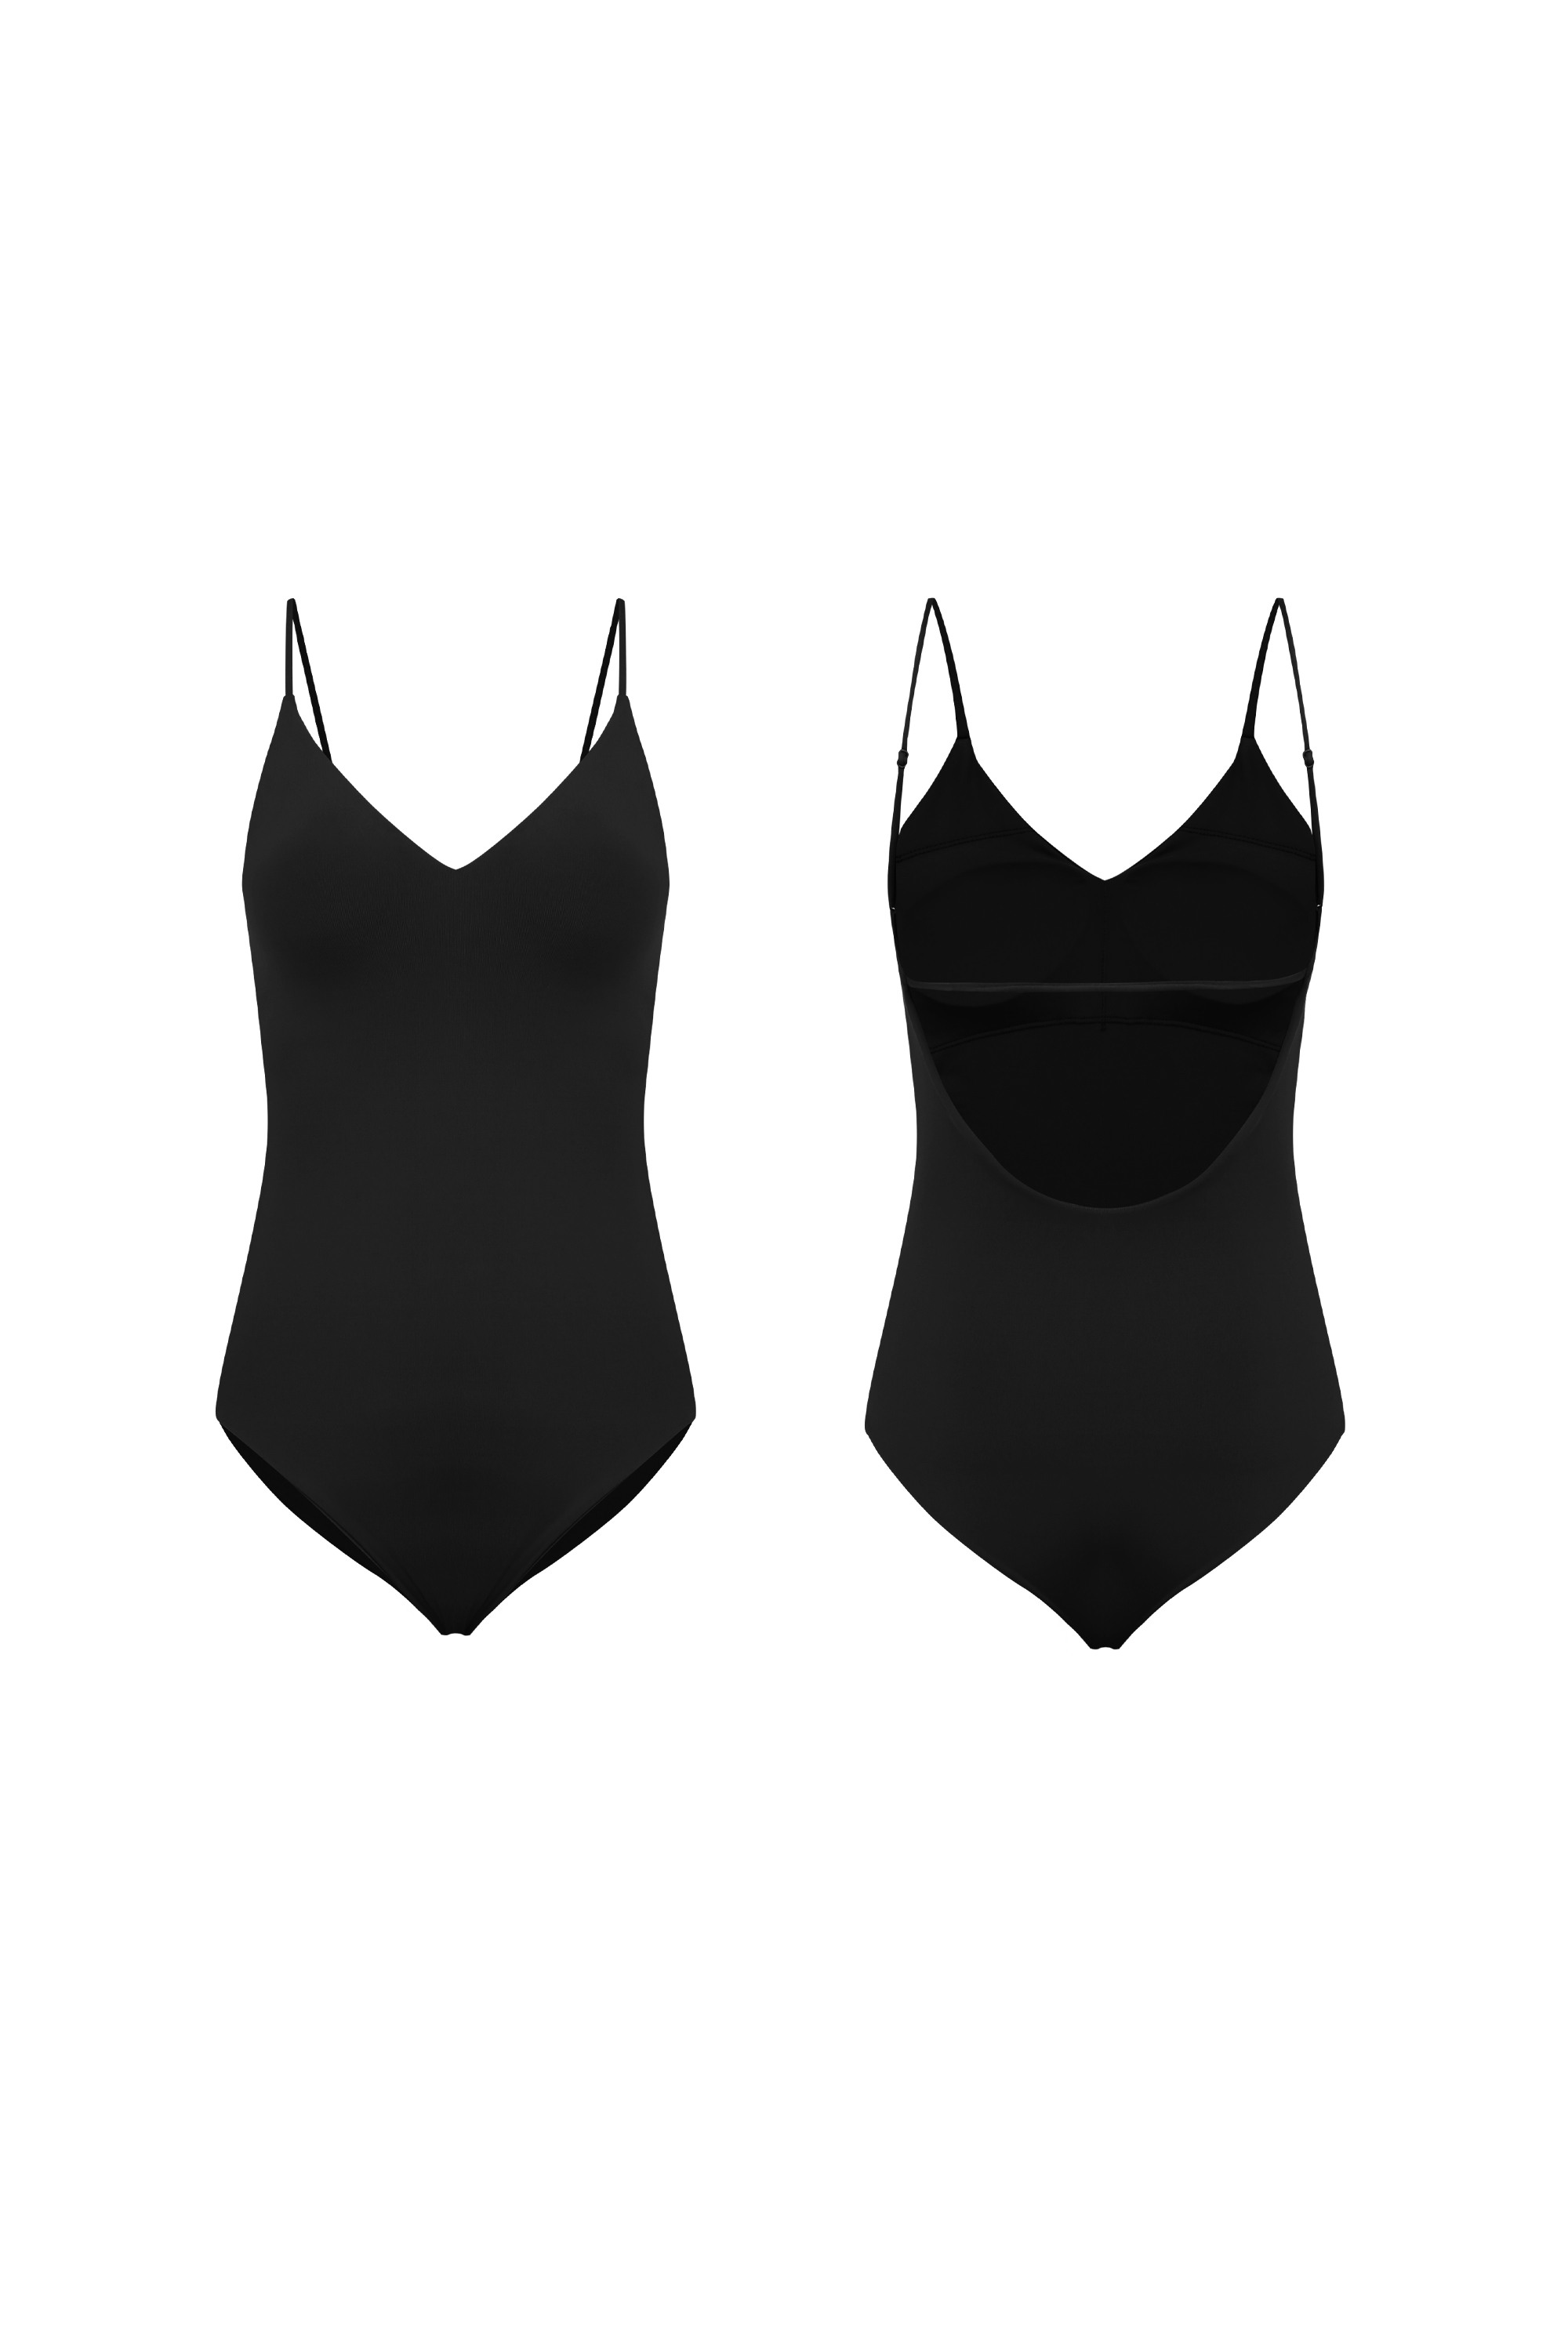 RVIS-swim-onepiece-black.jpg